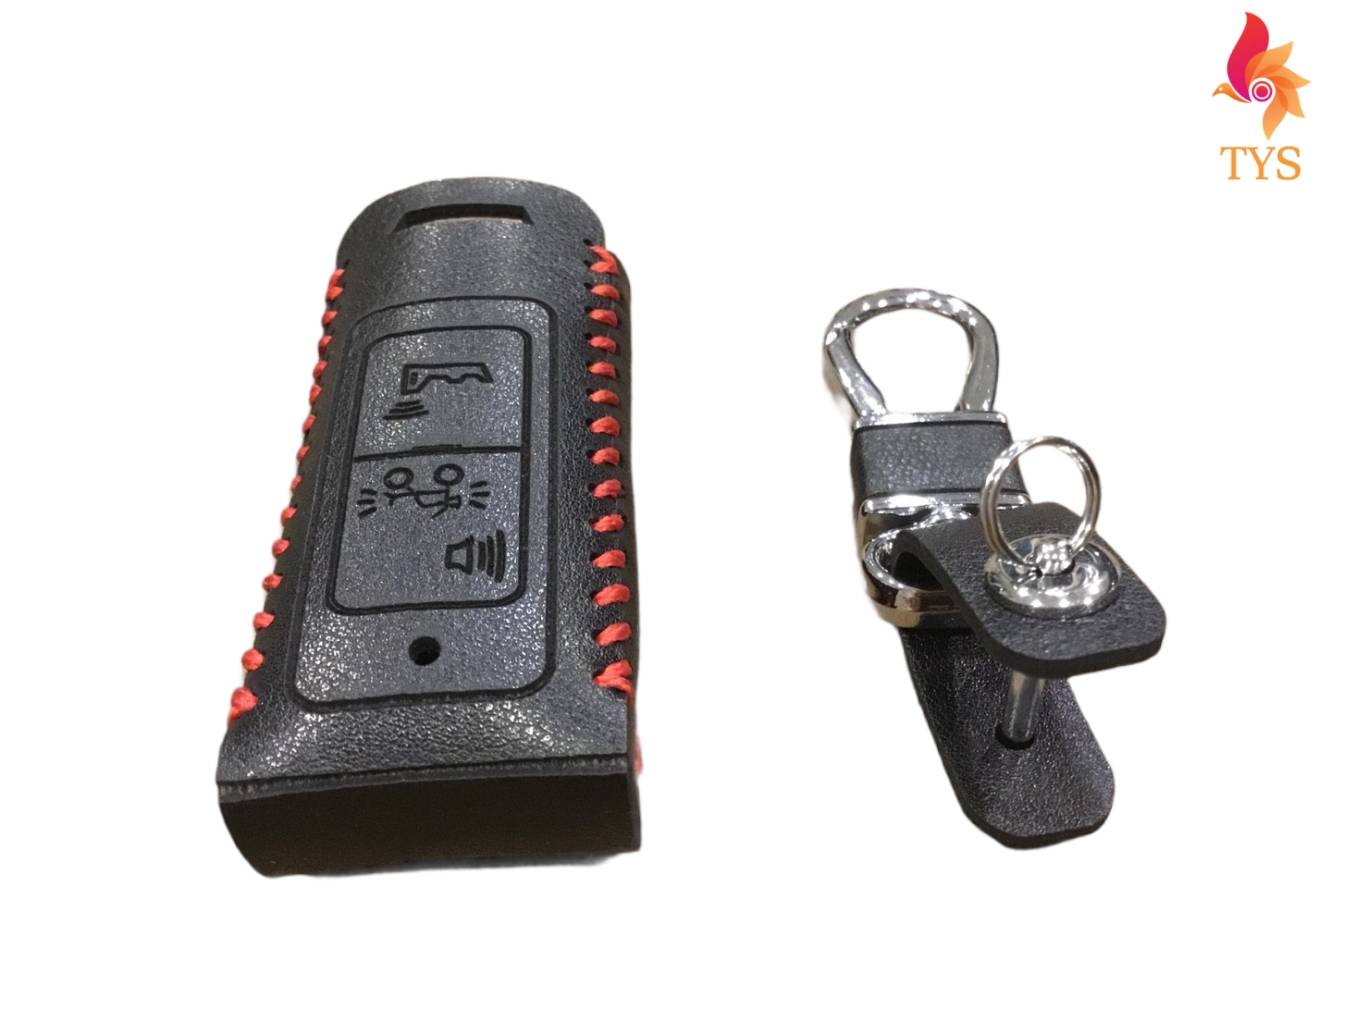 PCX ซองกุญแจ ซองรีโมท Pcx160 pcx2021 ซองหนังแท้แฮนเมด ของไทย100% สีดำ